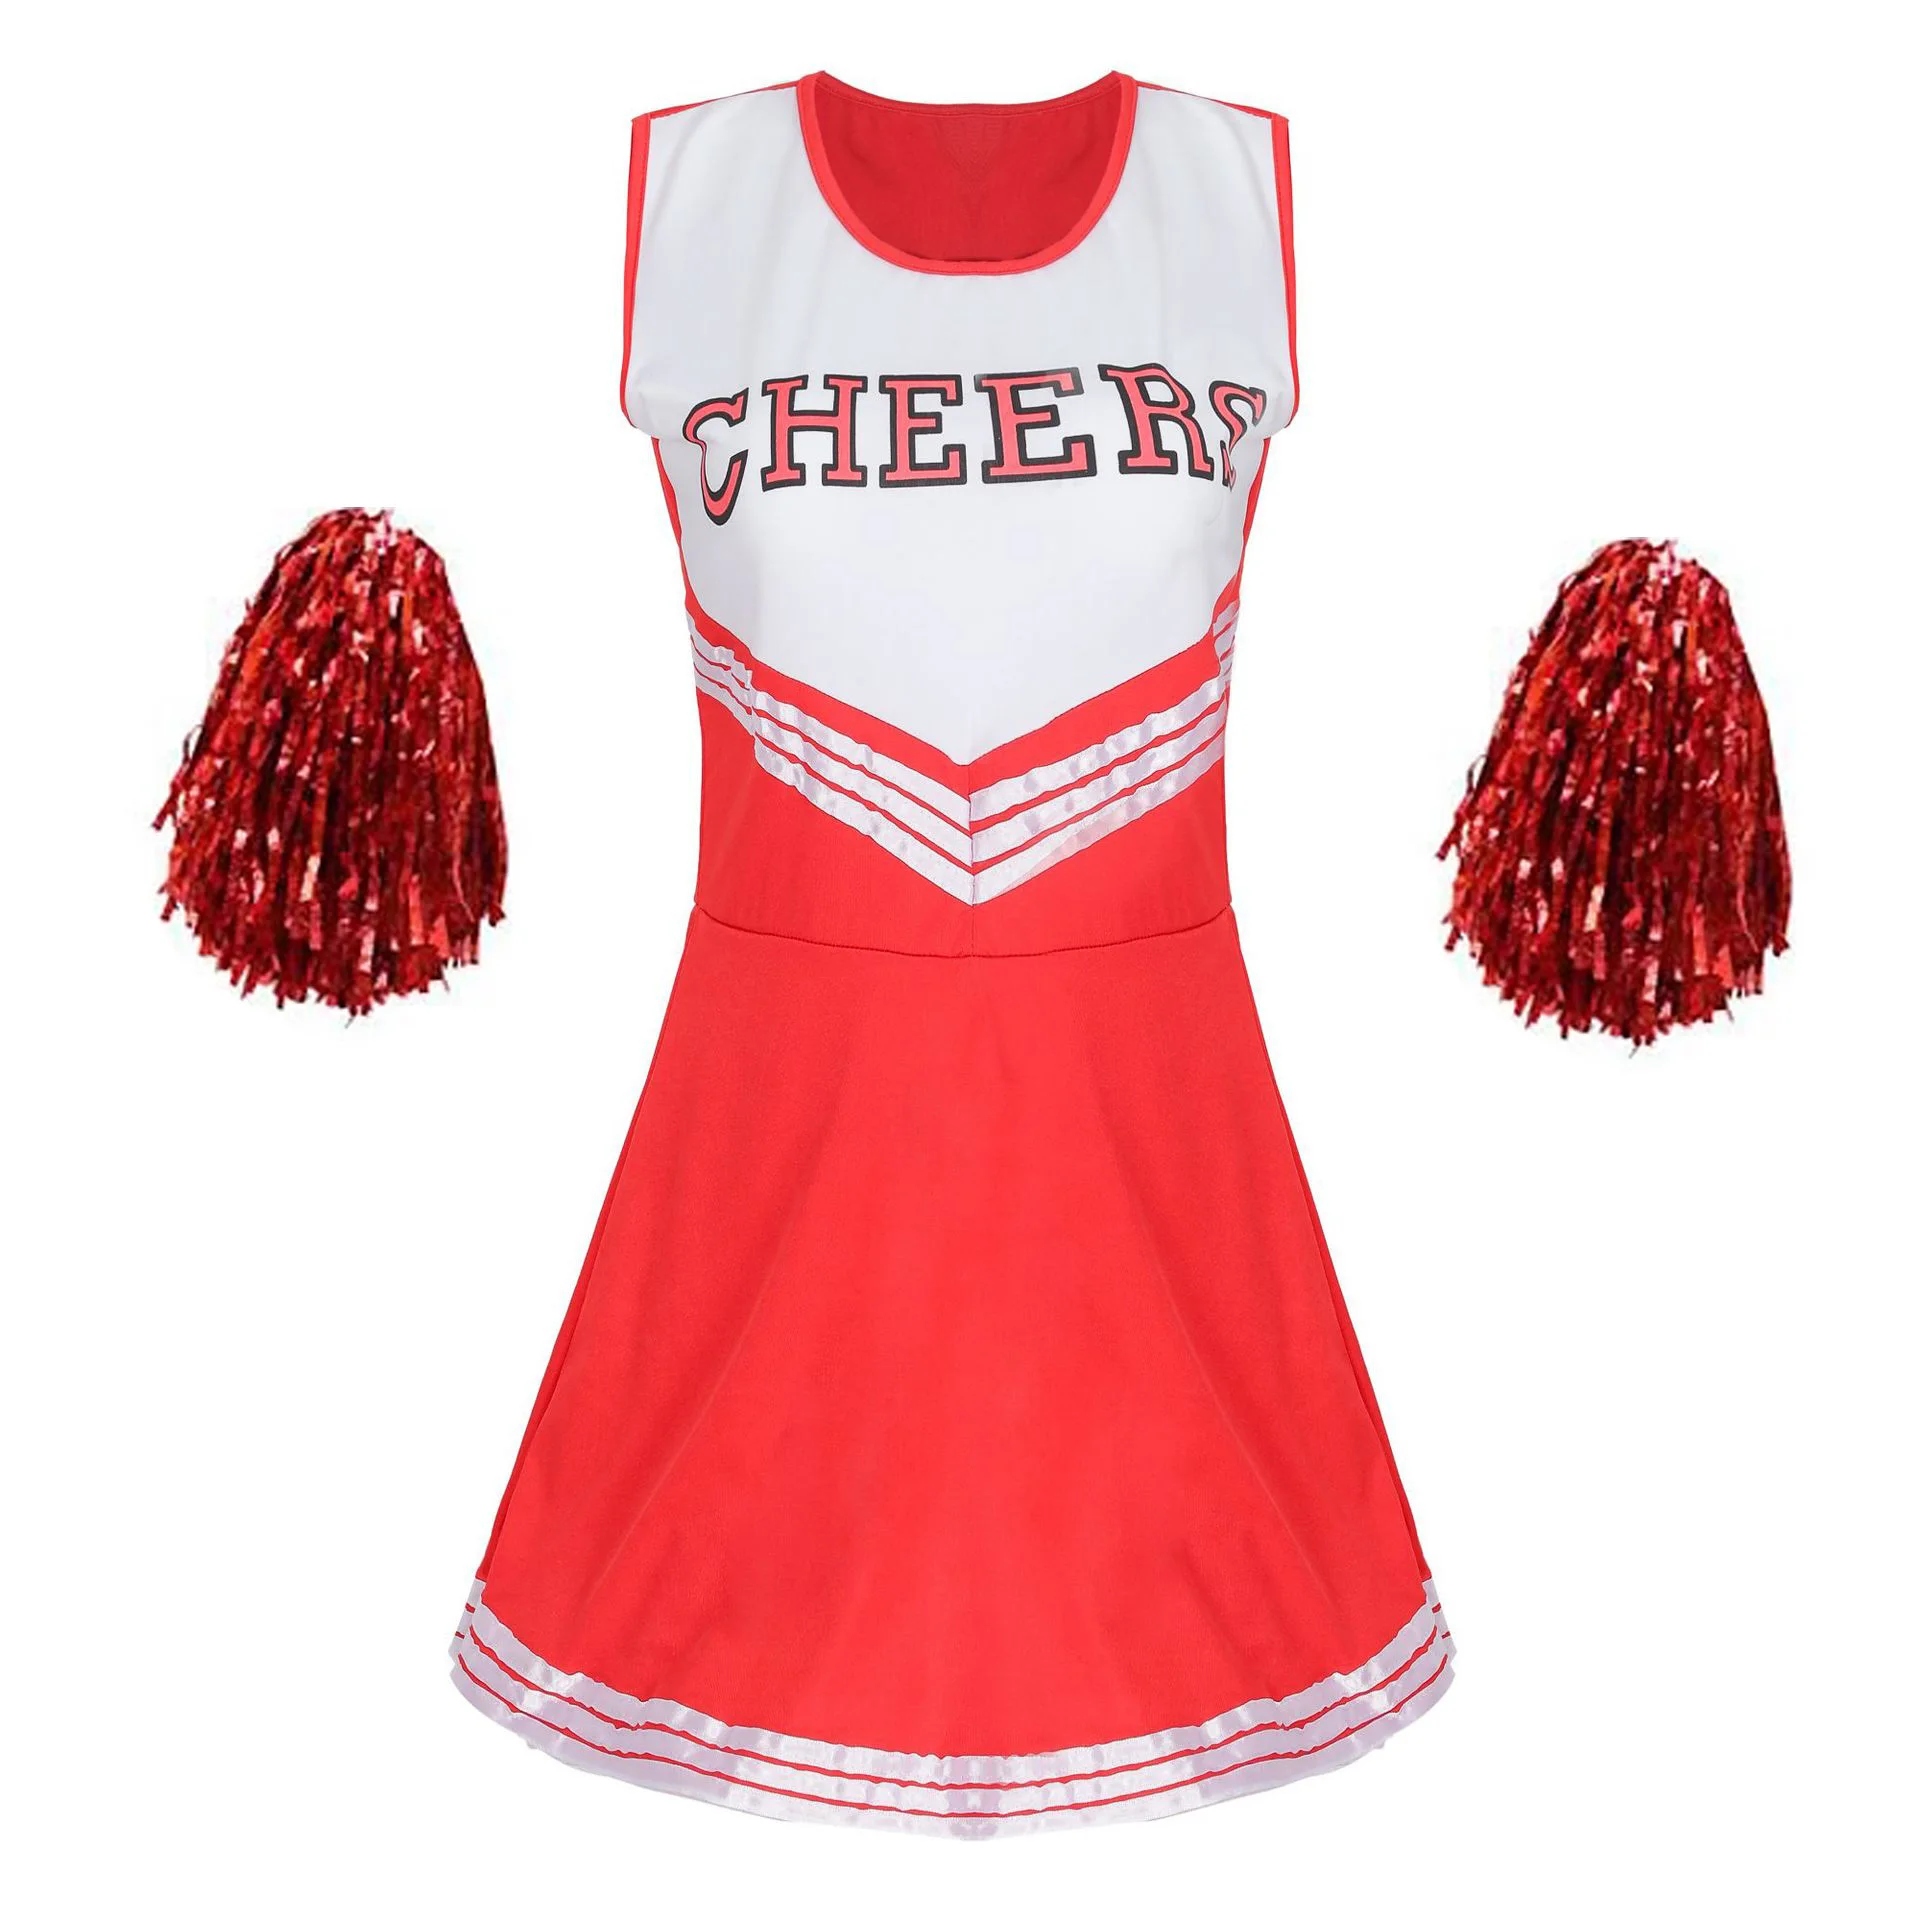 Cheerleader Stage Performance Red Dress+Pompoms Cheerleading Costumes Adult High School Cheer Uniform Girl Dancing Show